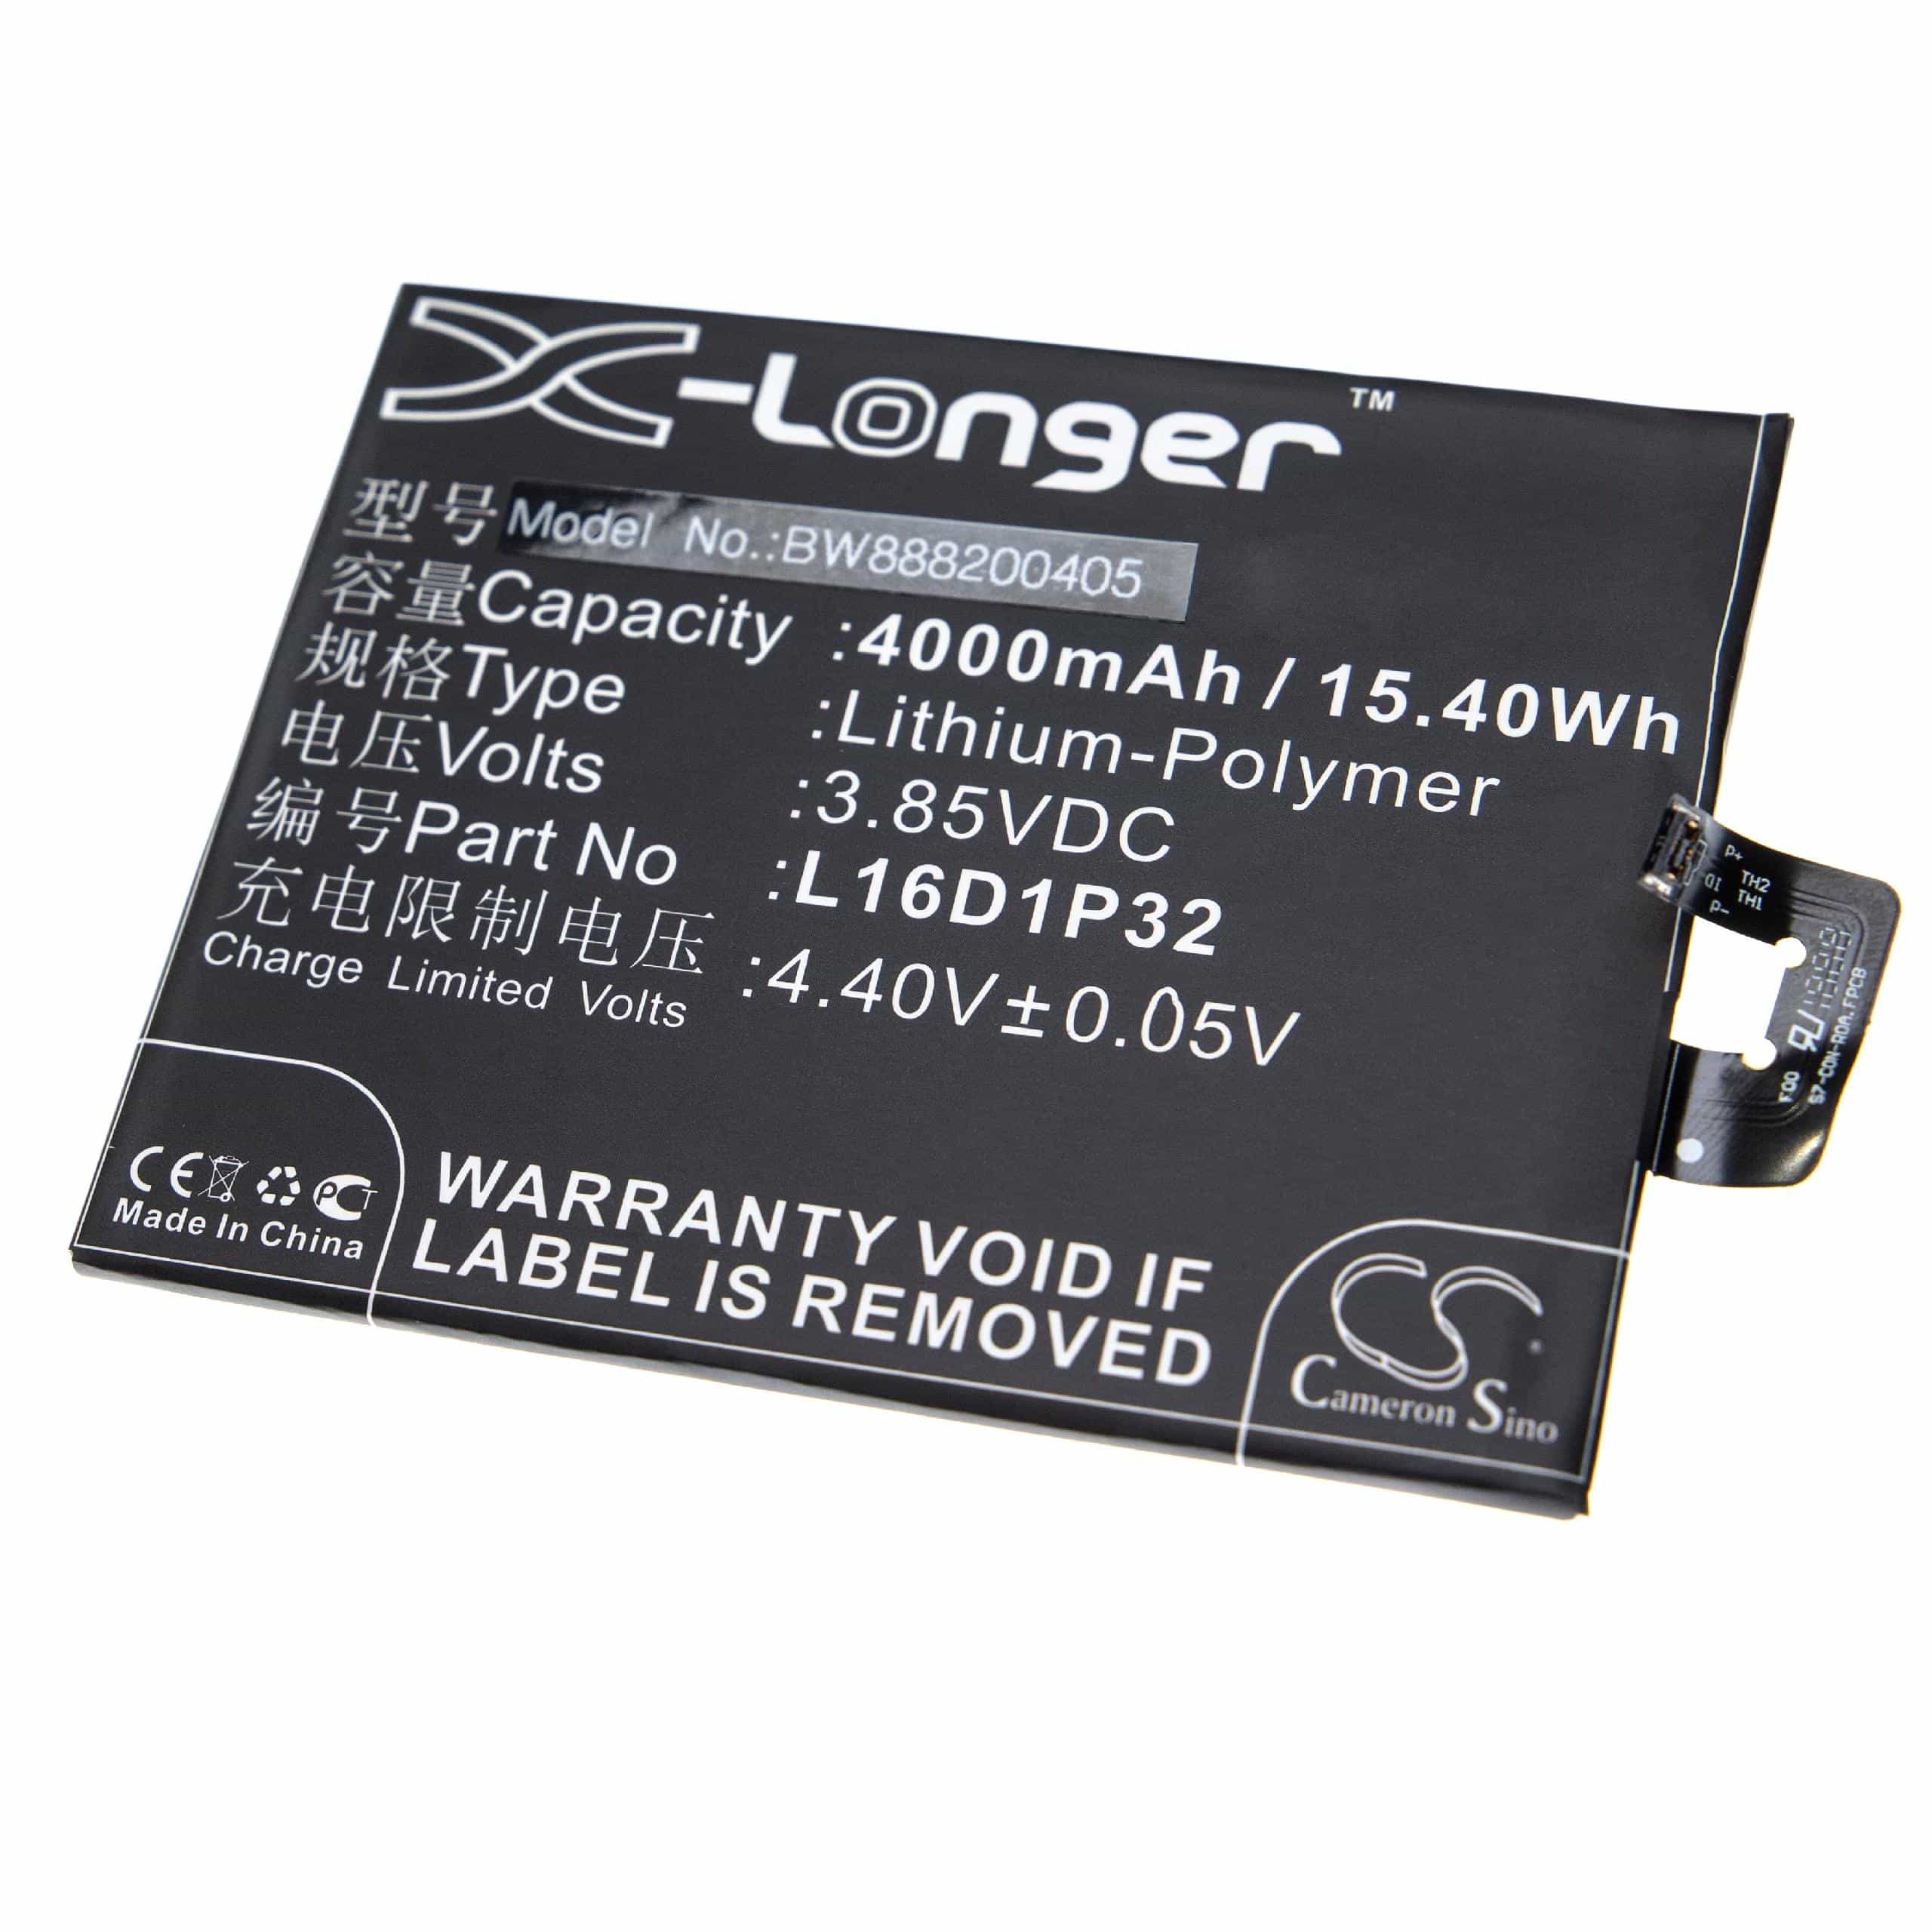 Mobile Phone Battery Replacement for Lenovo L16D1P32 - 4000mAh 3.85V Li-polymer